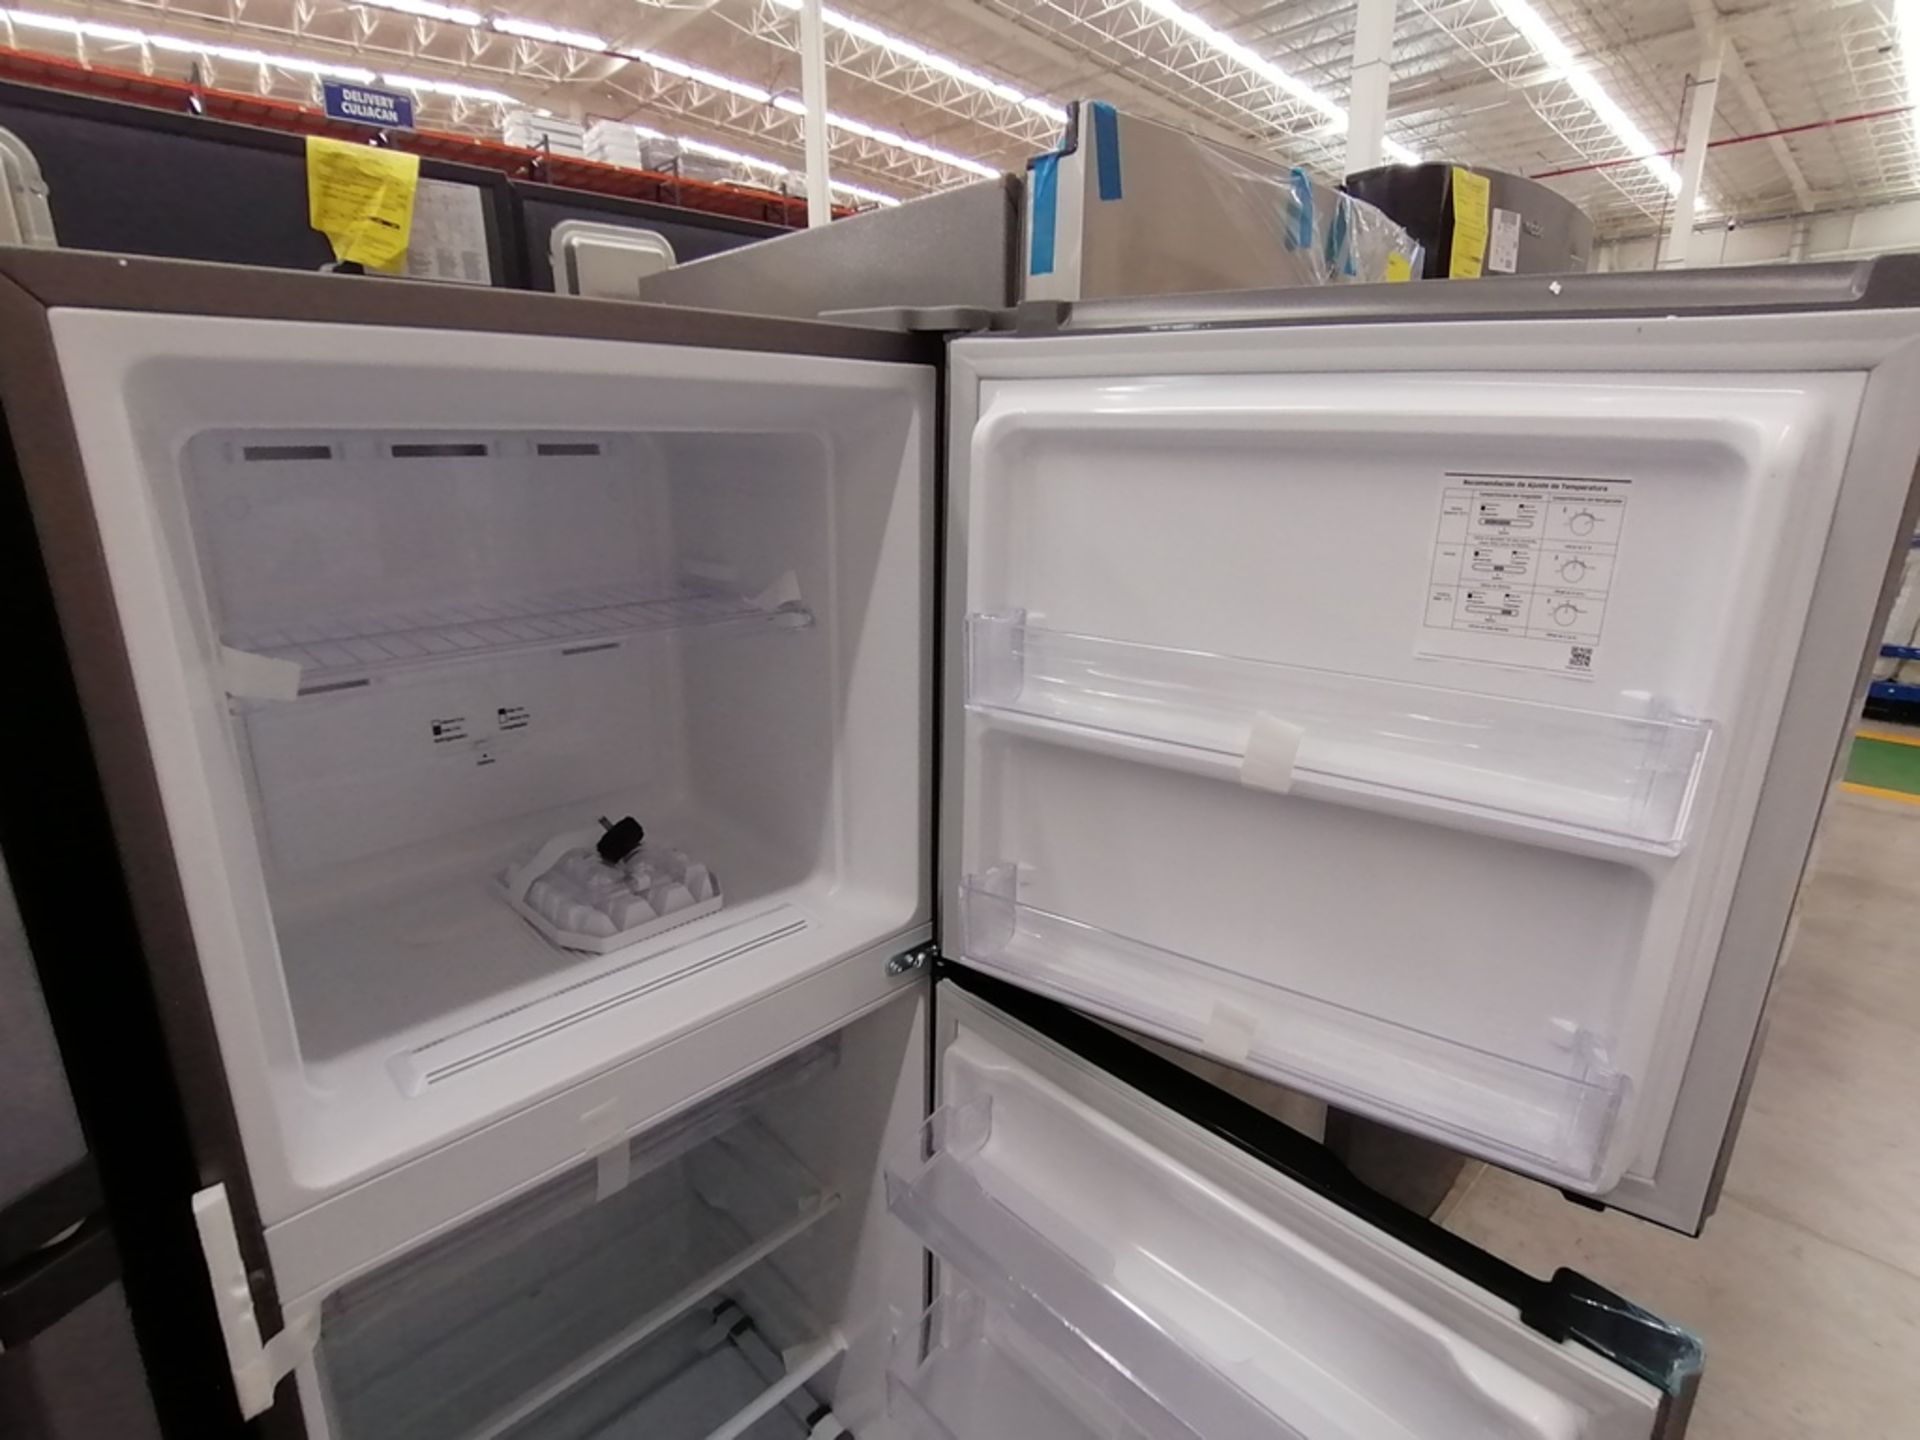 Lote de 2 refrigeradores incluye: 1 Refrigerador, Marca Samsung, Modelo RT29K500JS8, Serie 0AZS4BAR - Image 4 of 15